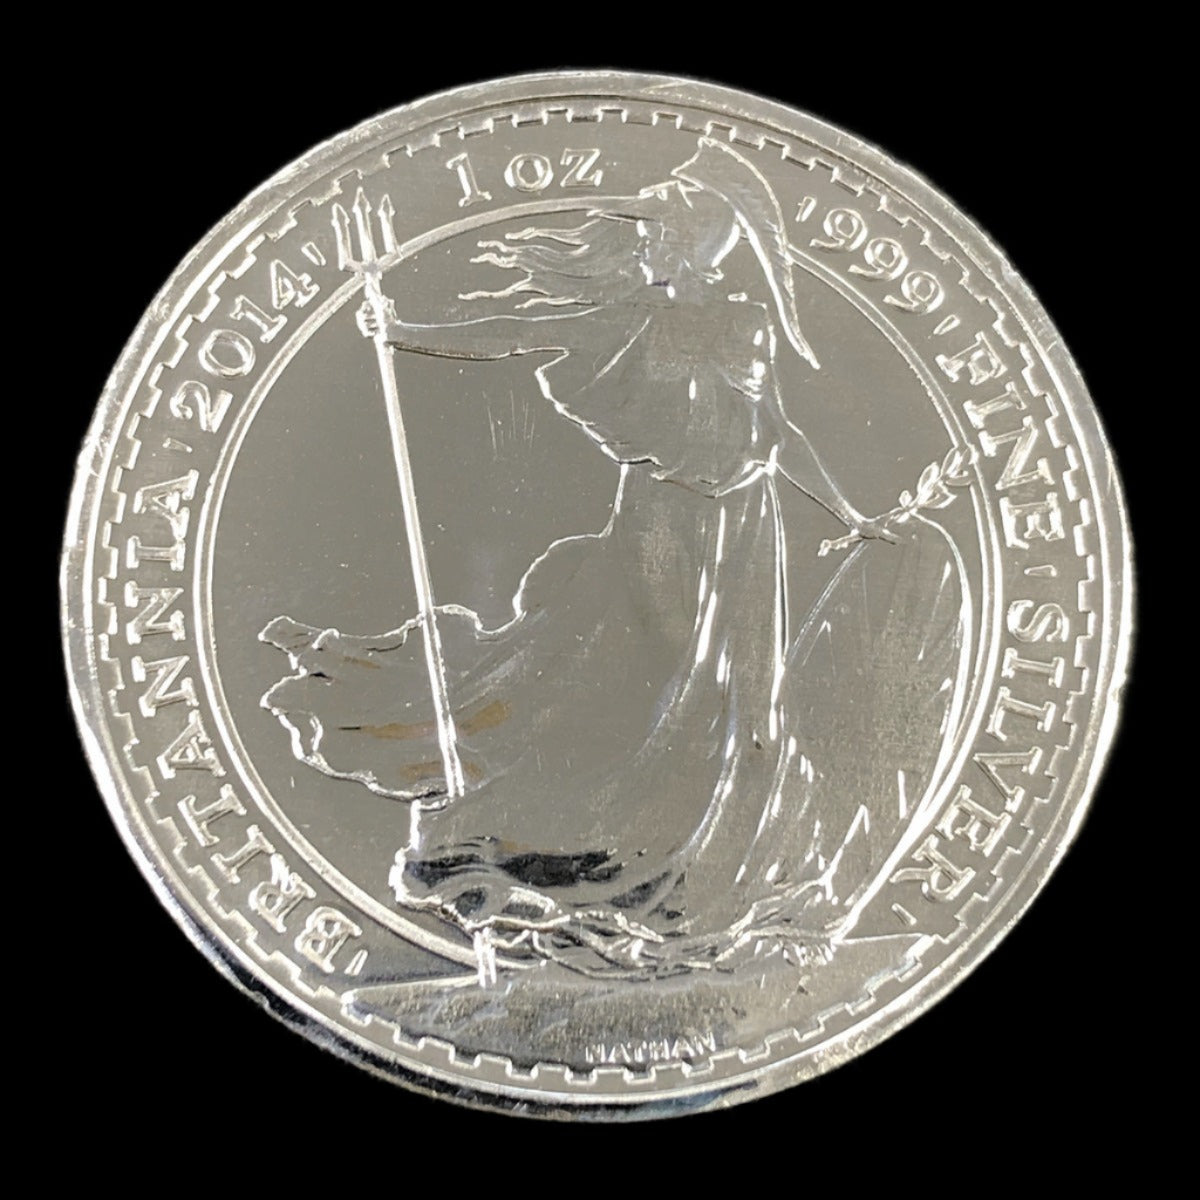 2014 British 1 oz Silver Britannia (Year of the Horse Privy) (Secondary Market)